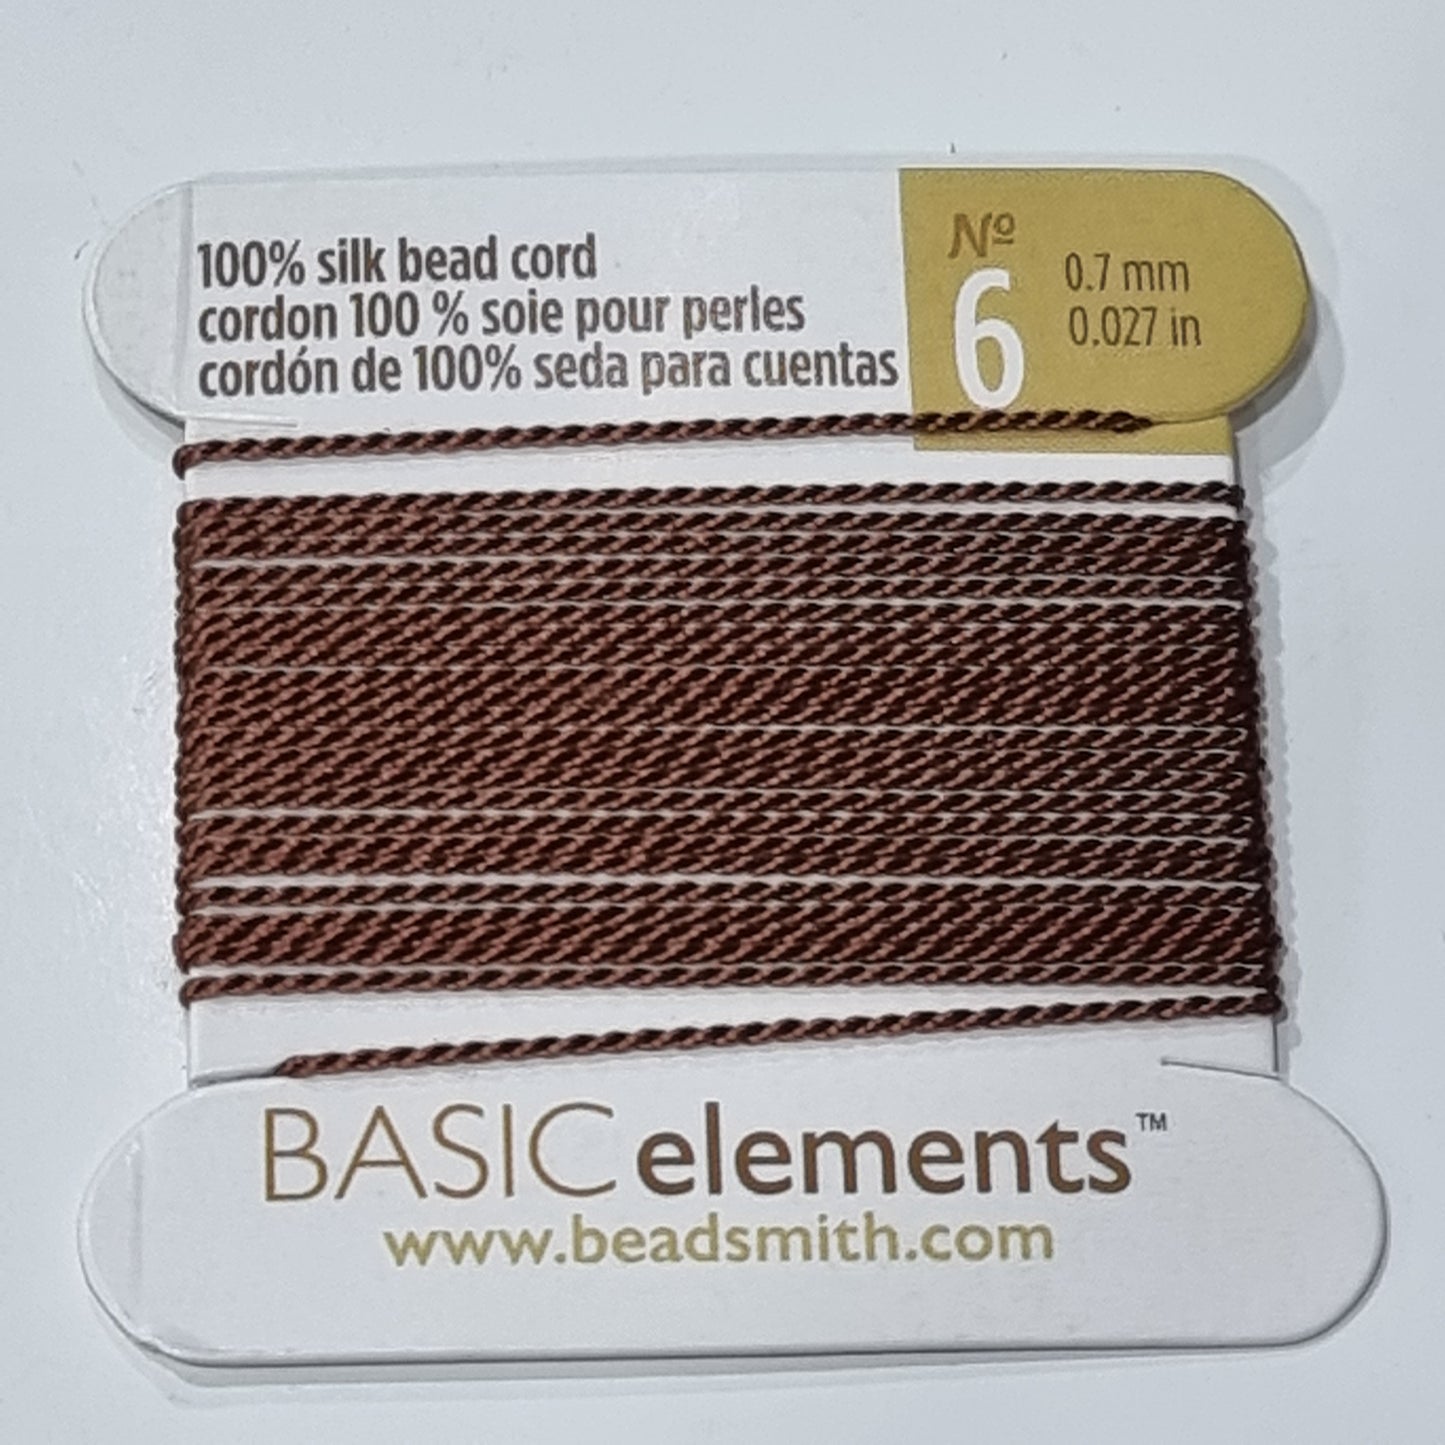 Beadsmith 100% Brown Silk Cord No6